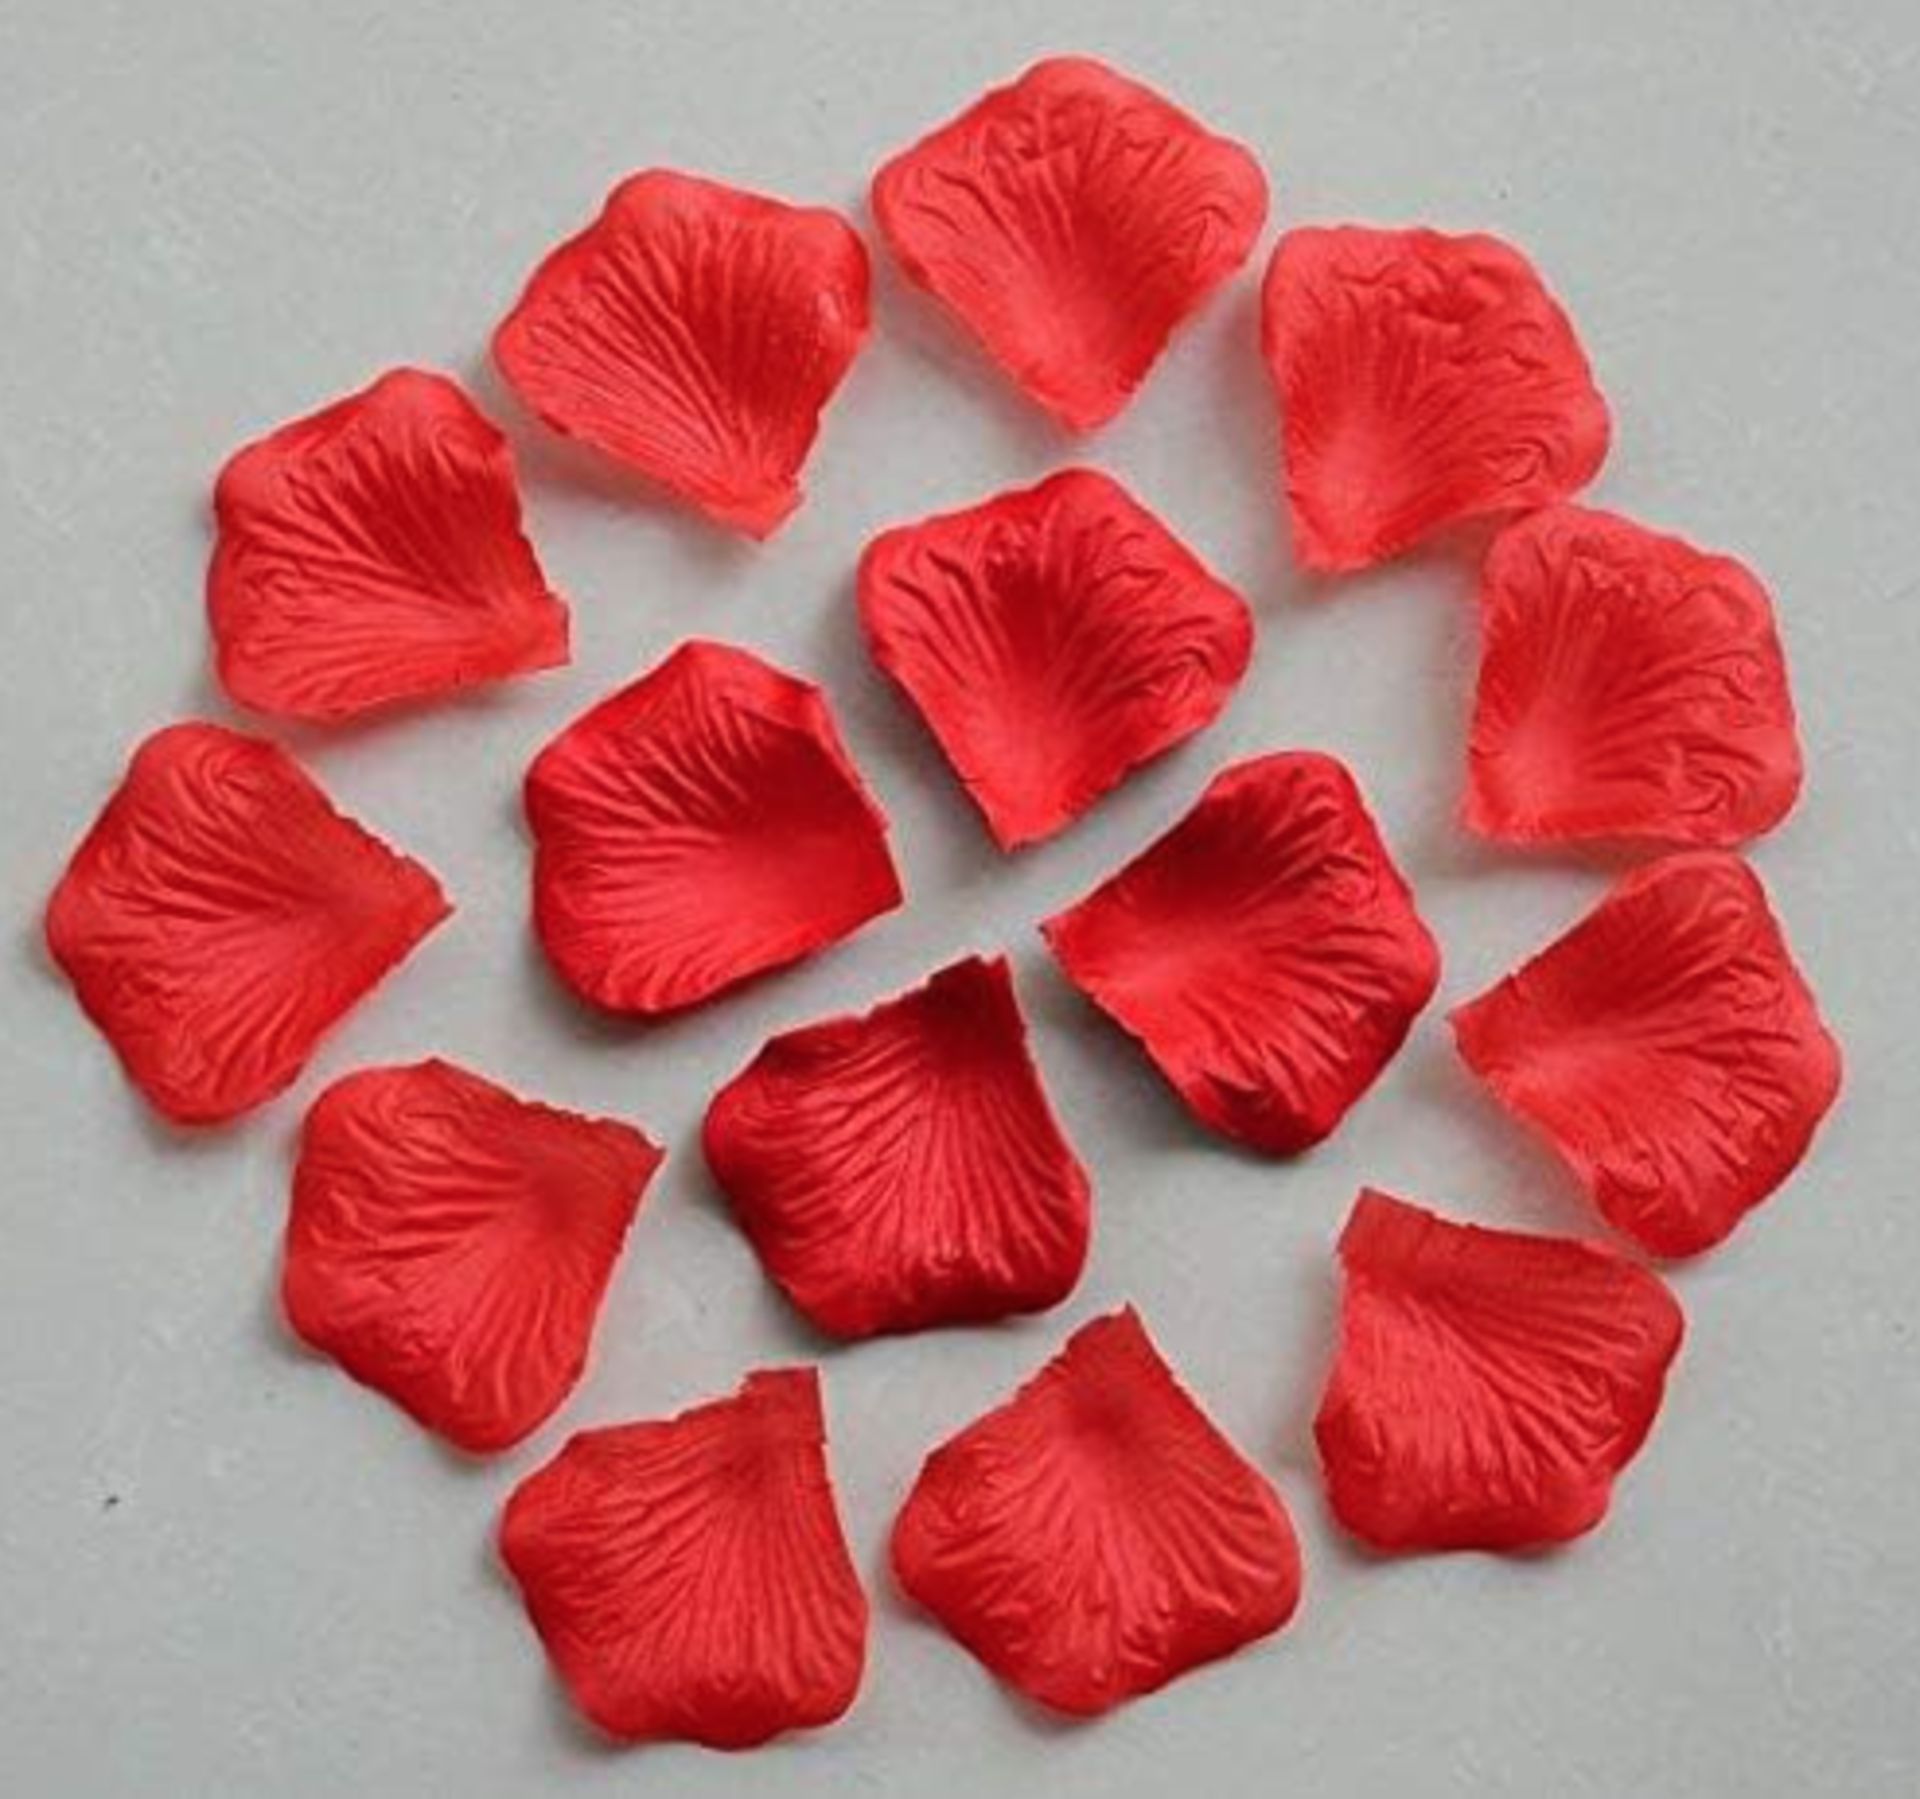 500pcs Deep Red Silk Rose Petals Valentines Day Wedding Confetti RRP £15 (5 x 100pcs) - Image 3 of 3